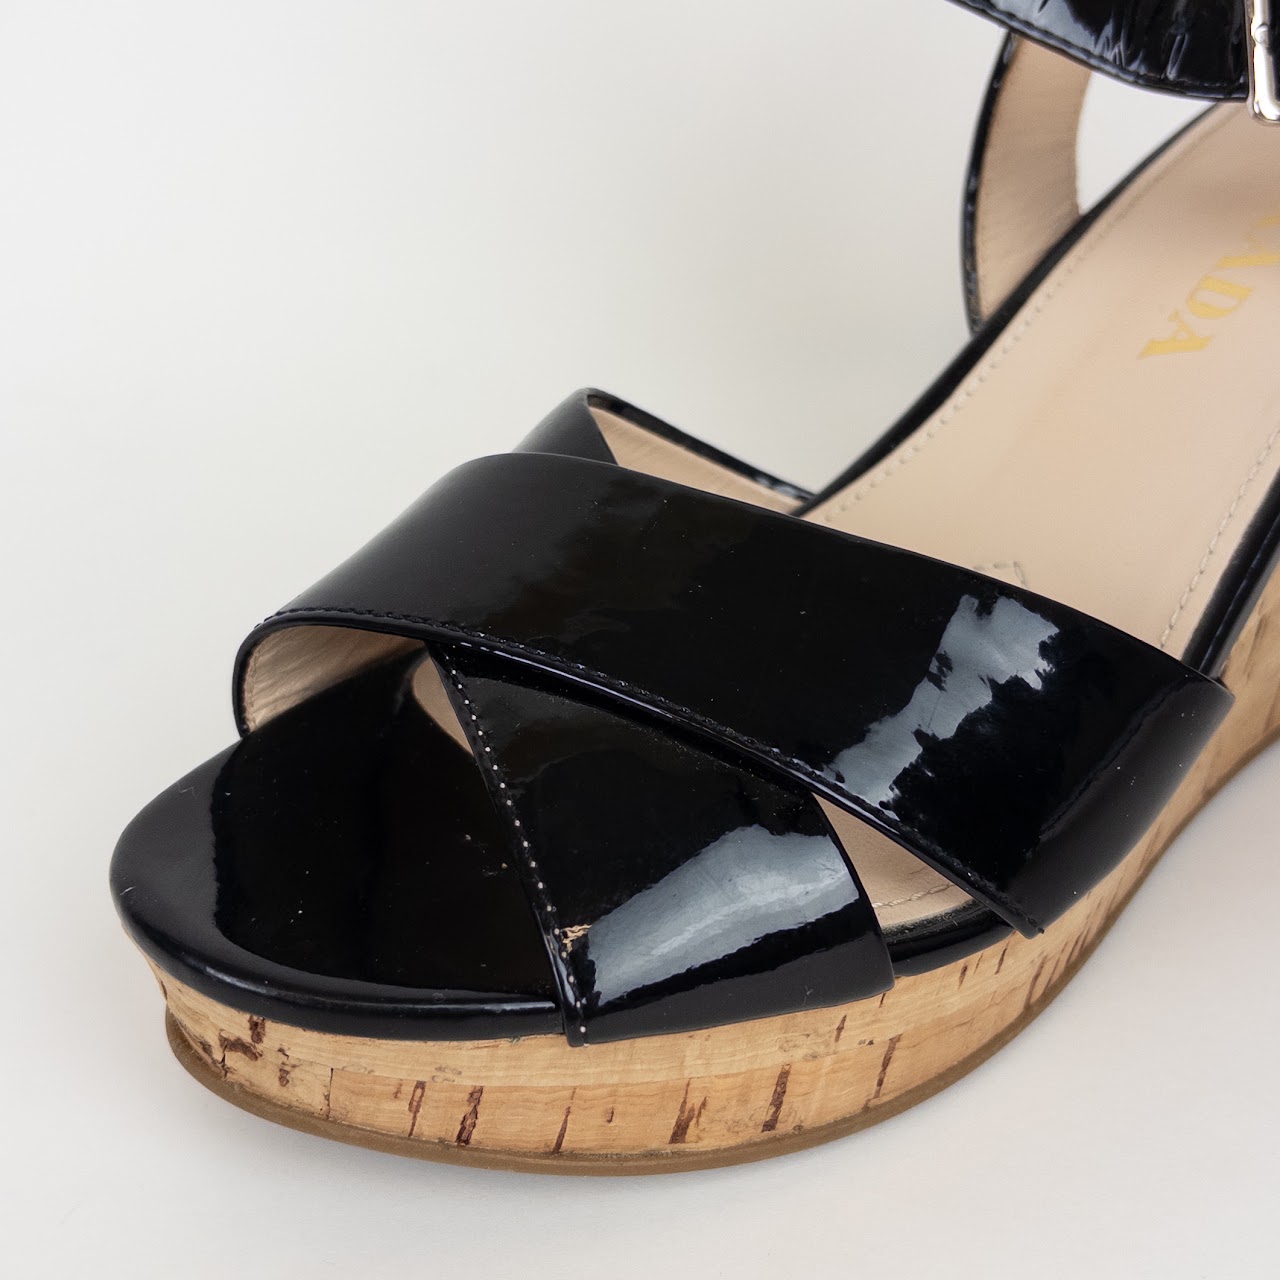 Prada Patent Leather Slingback Sandals